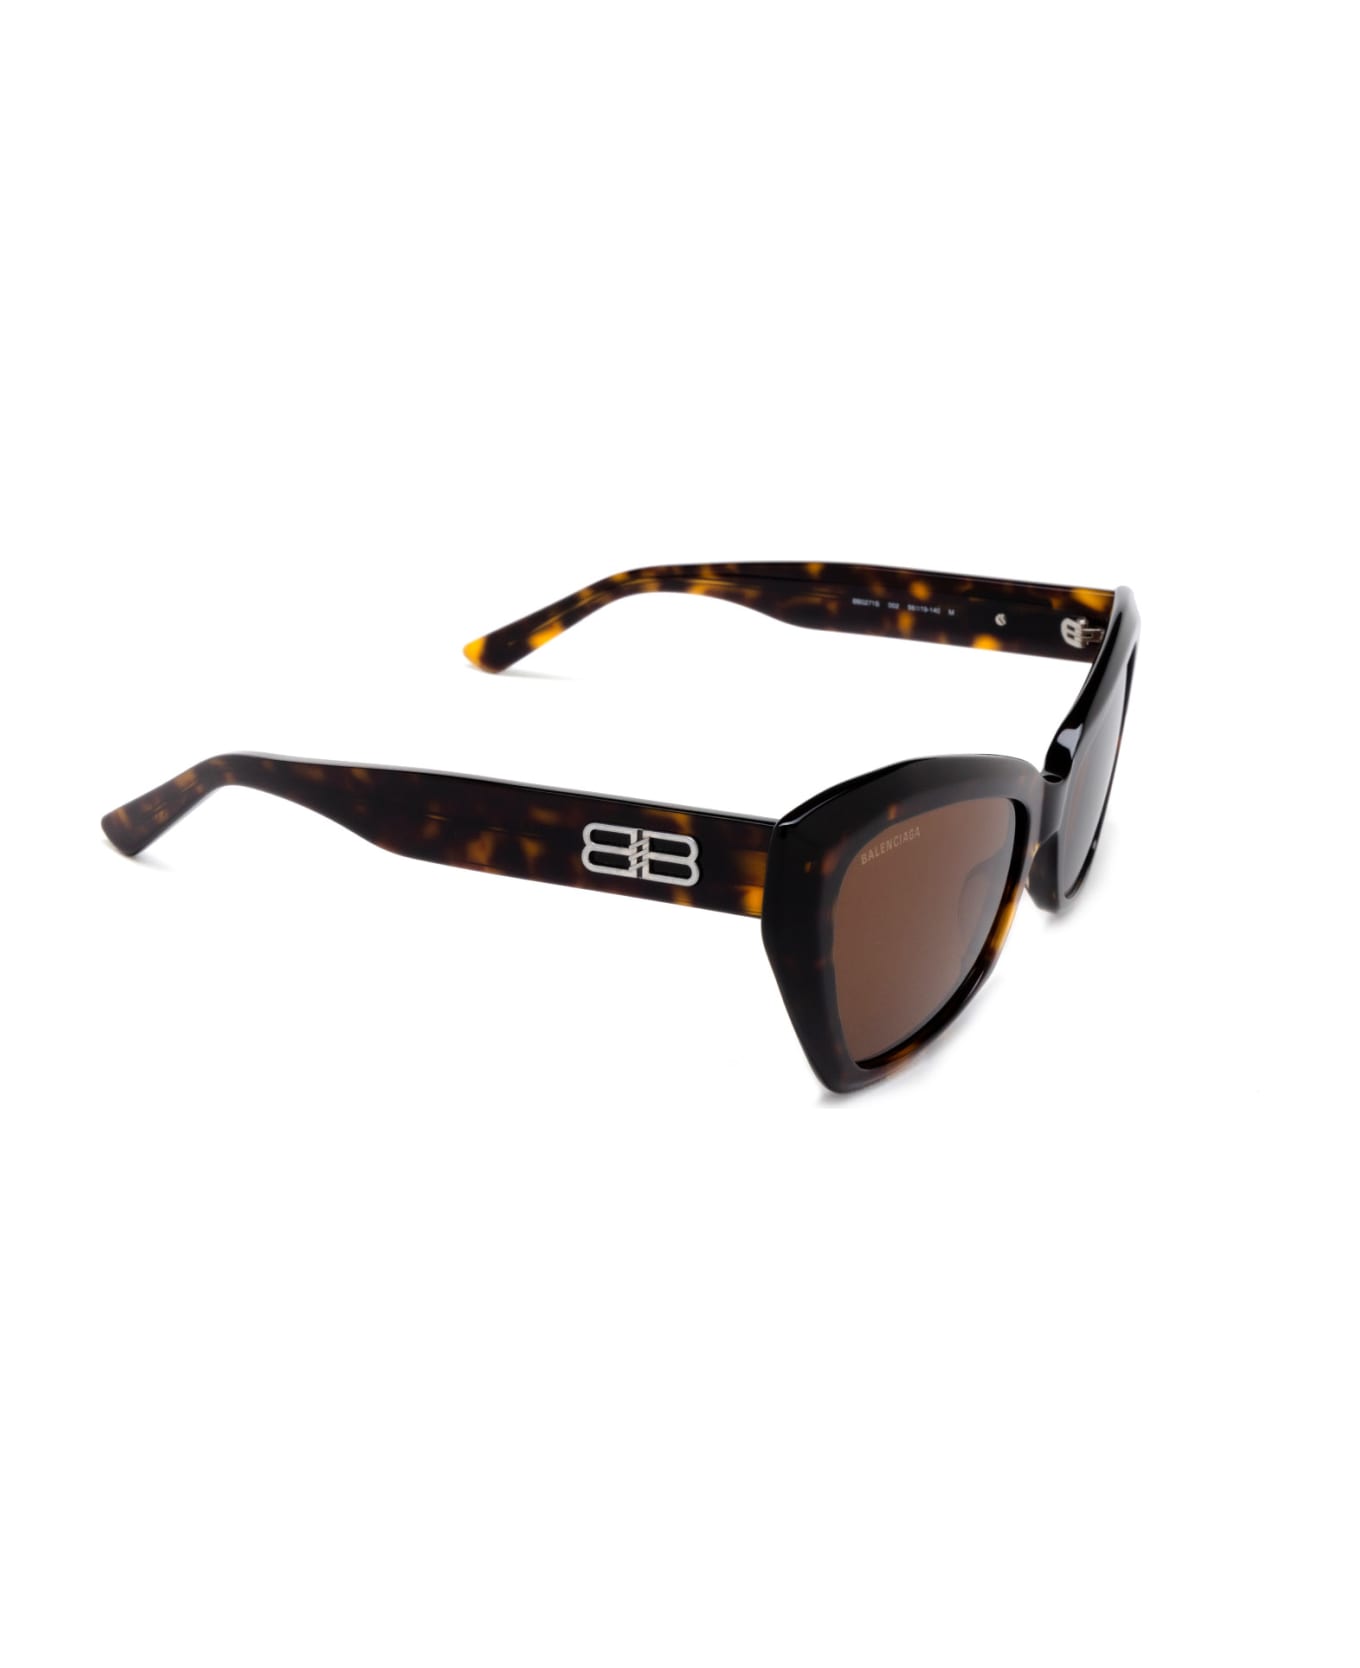 Balenciaga Eyewear Bb0271s Sunglasses - Havana サングラス